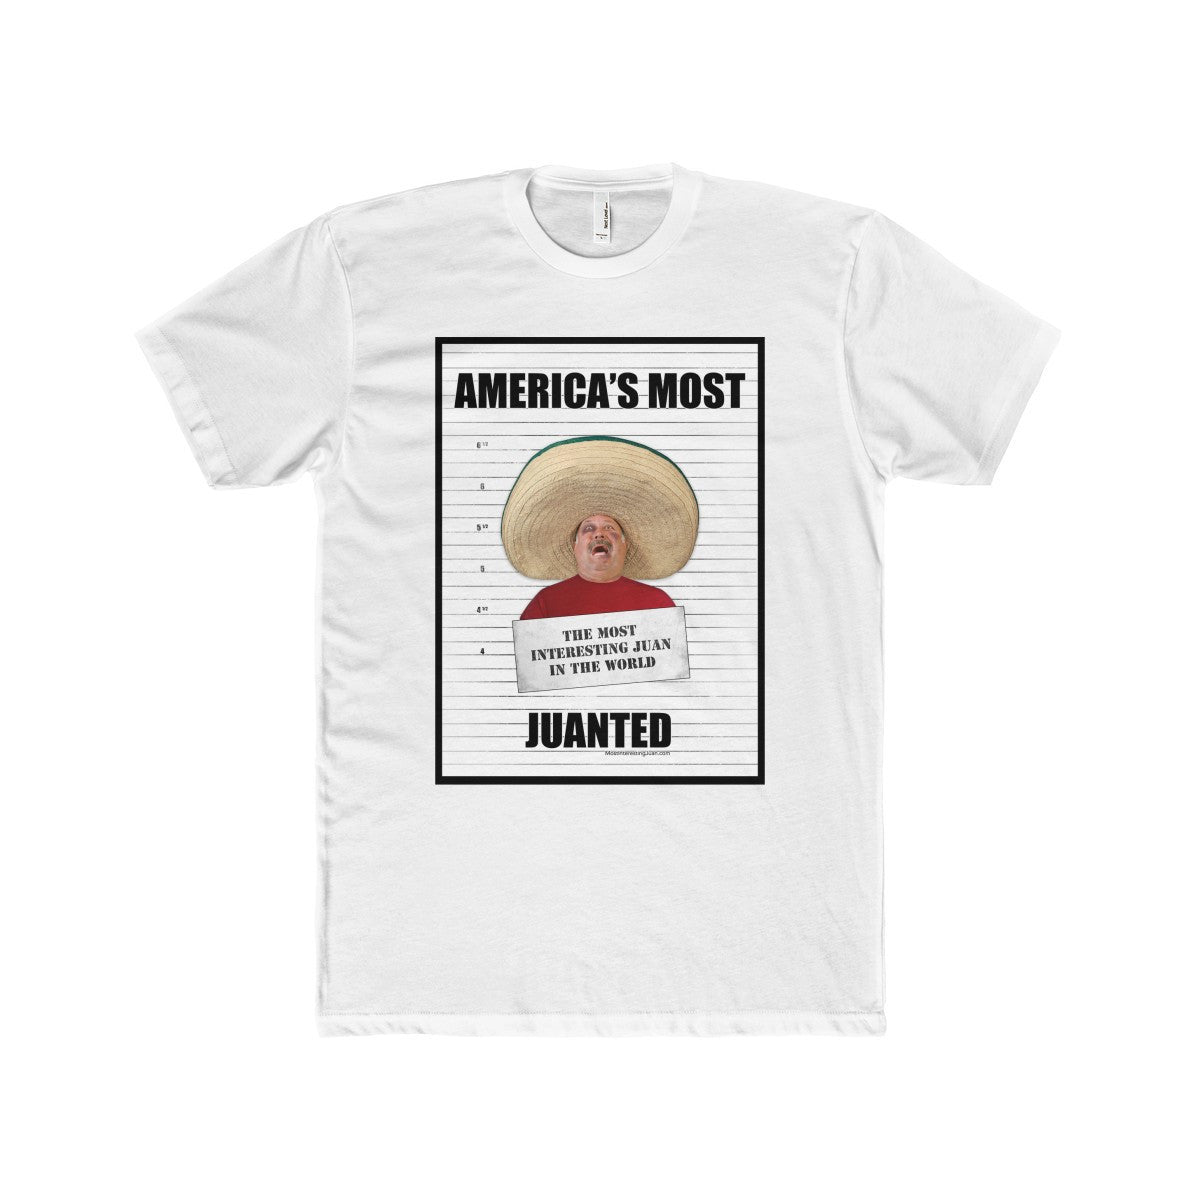 America's Most Juanted - Men's T-shirt